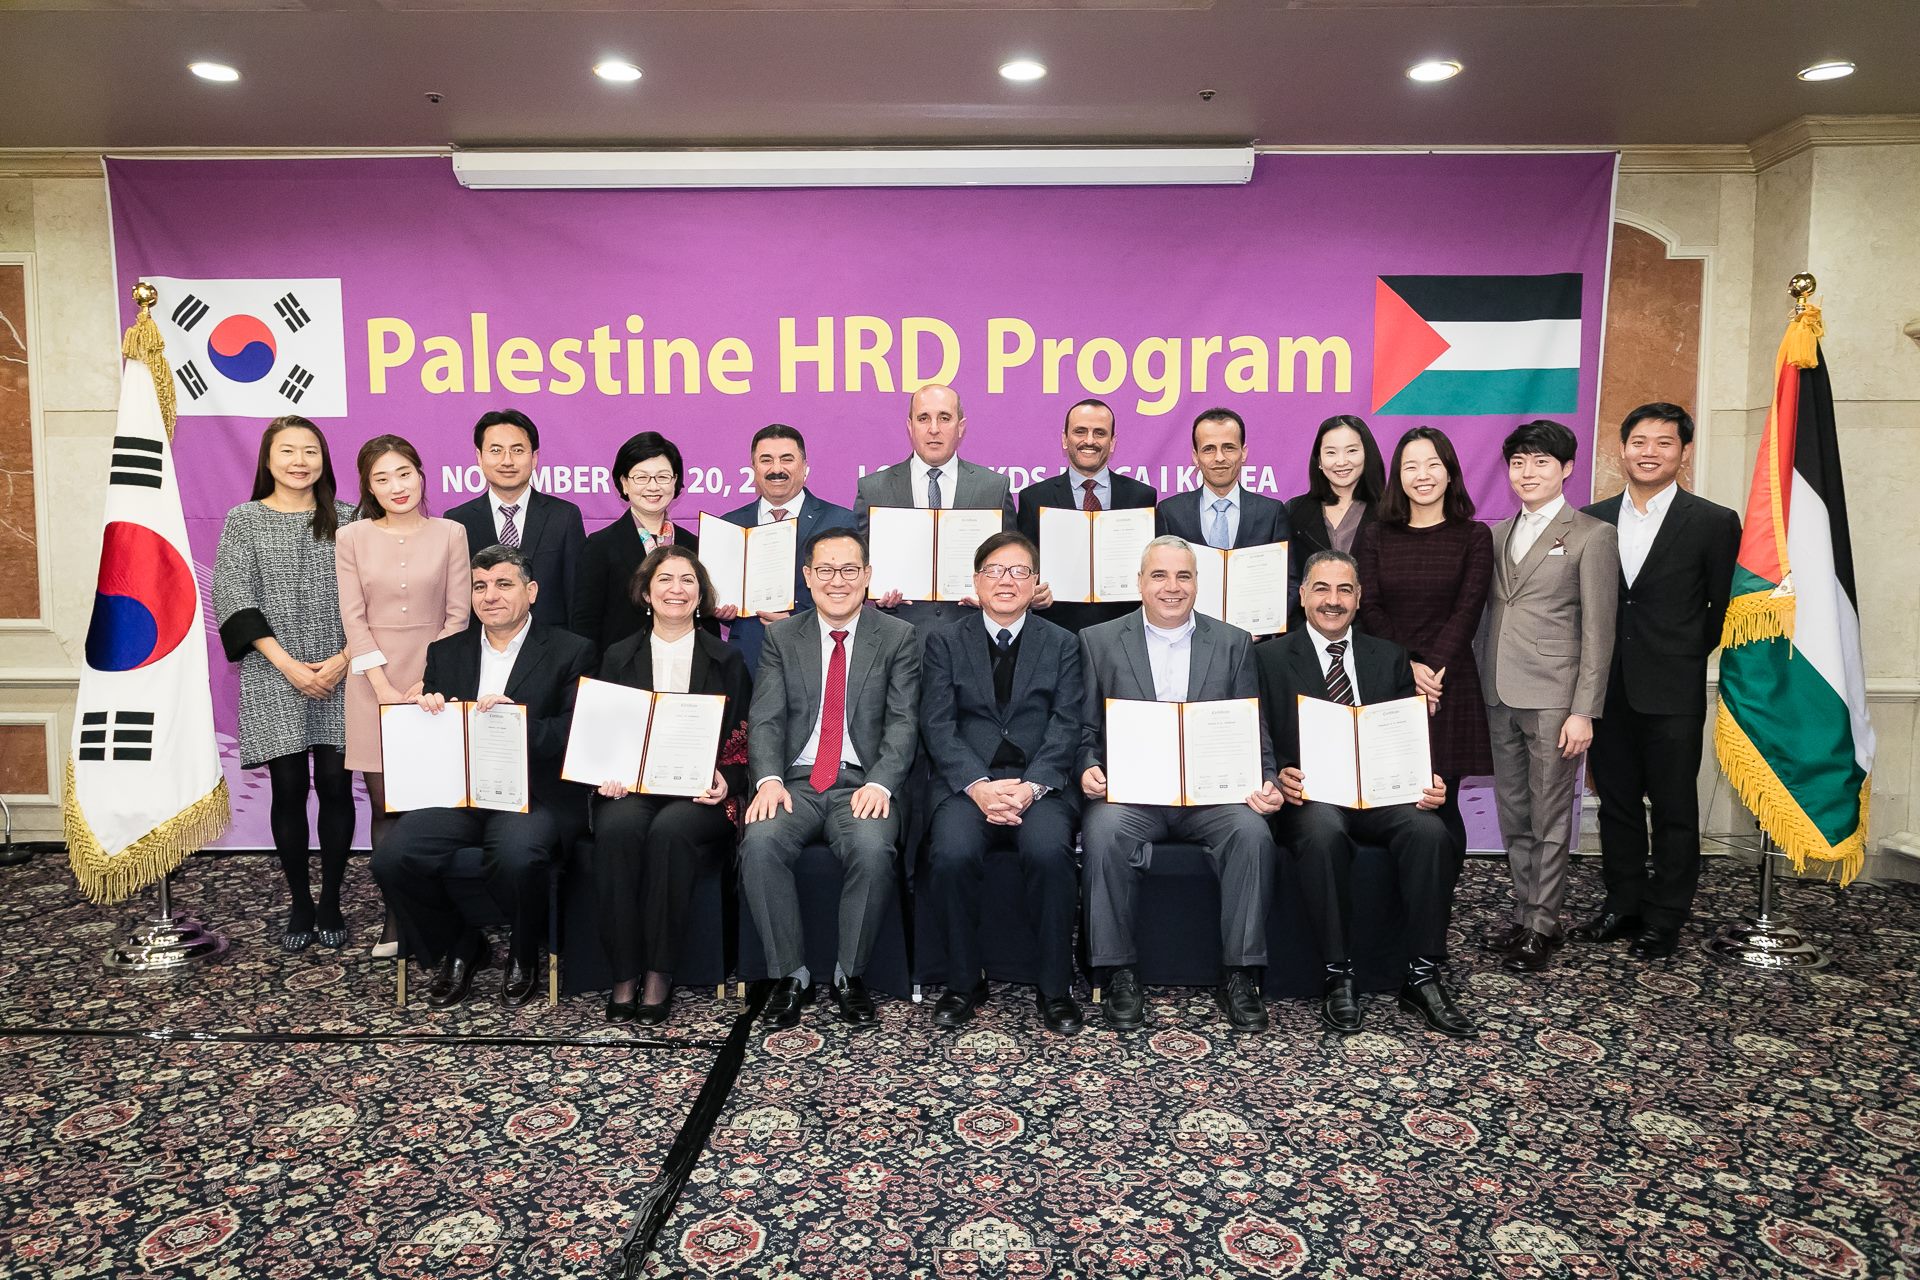 Palestinian HRD managers complete program in Korea 큰 이미지[마우스 클릭 시 창닫기]